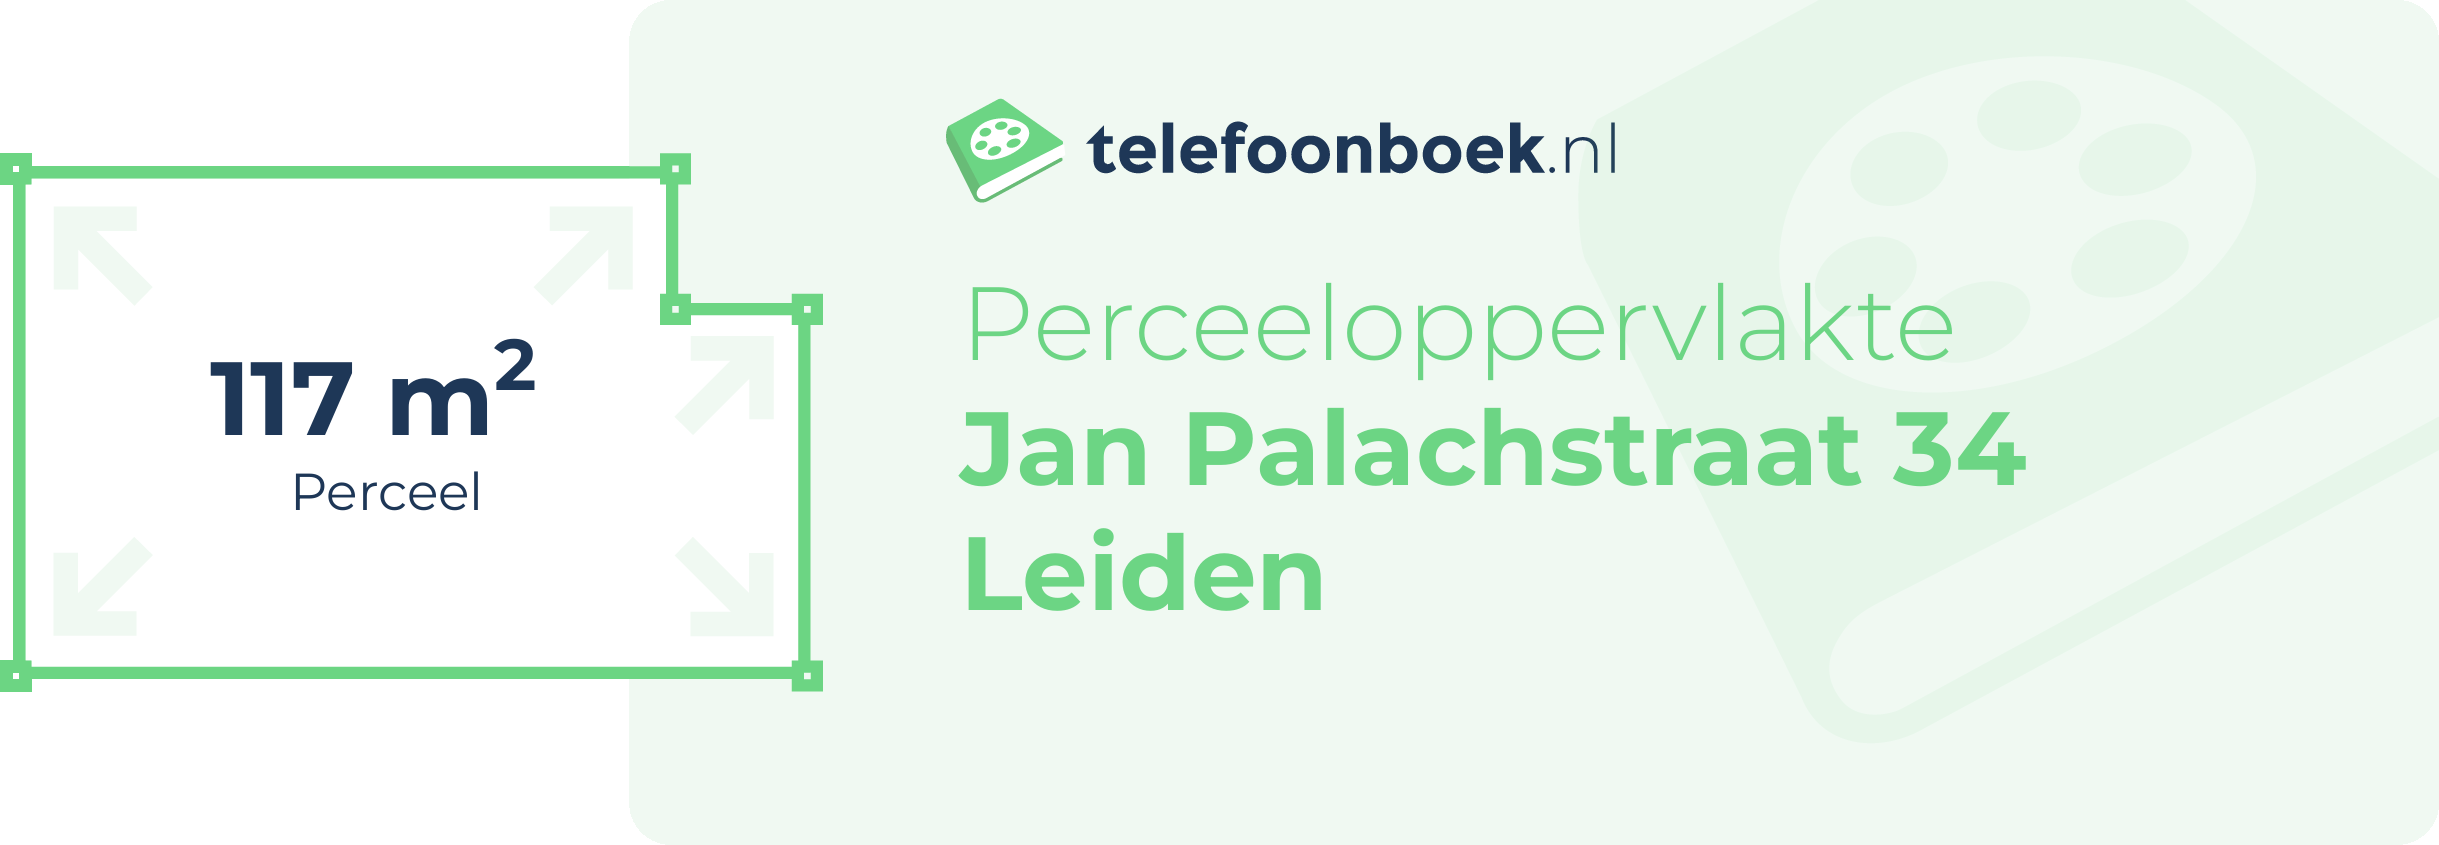 Perceeloppervlakte Jan Palachstraat 34 Leiden